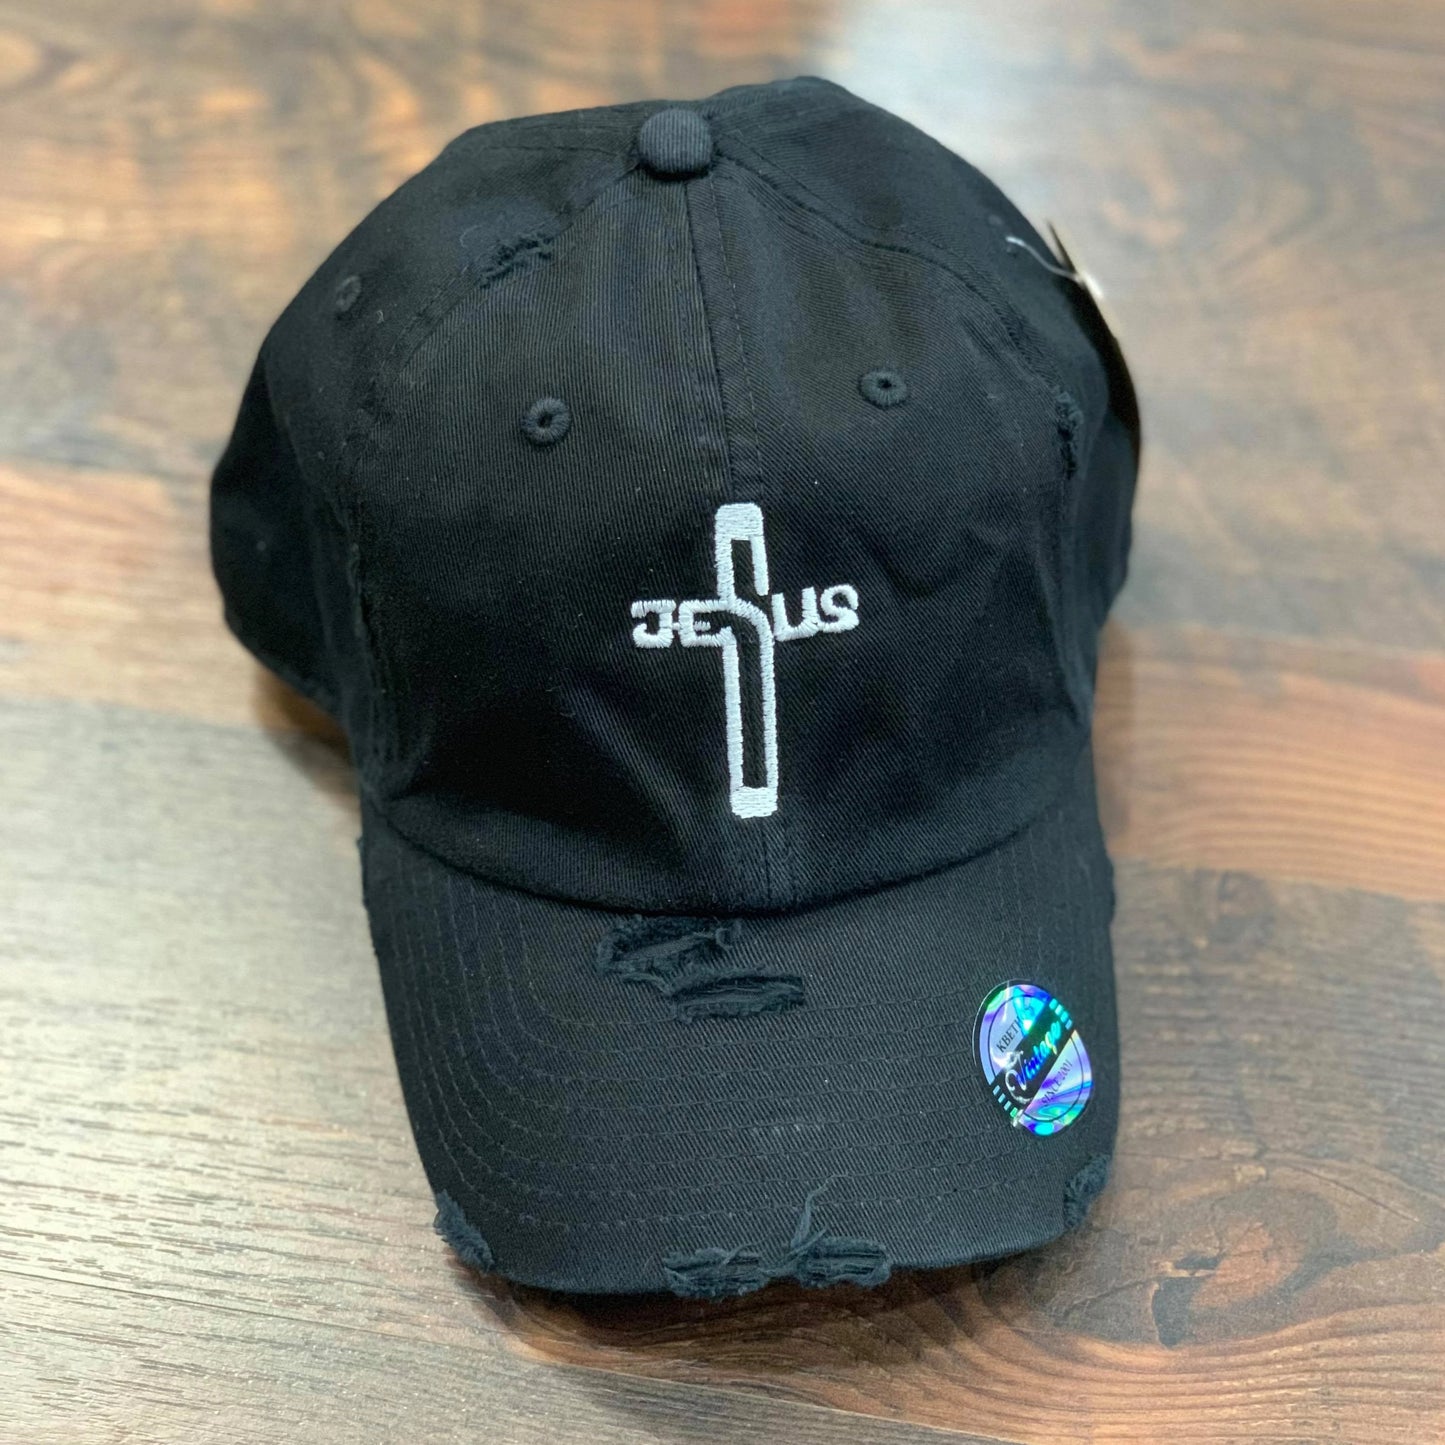 New Vintage Cross Jesus Hat